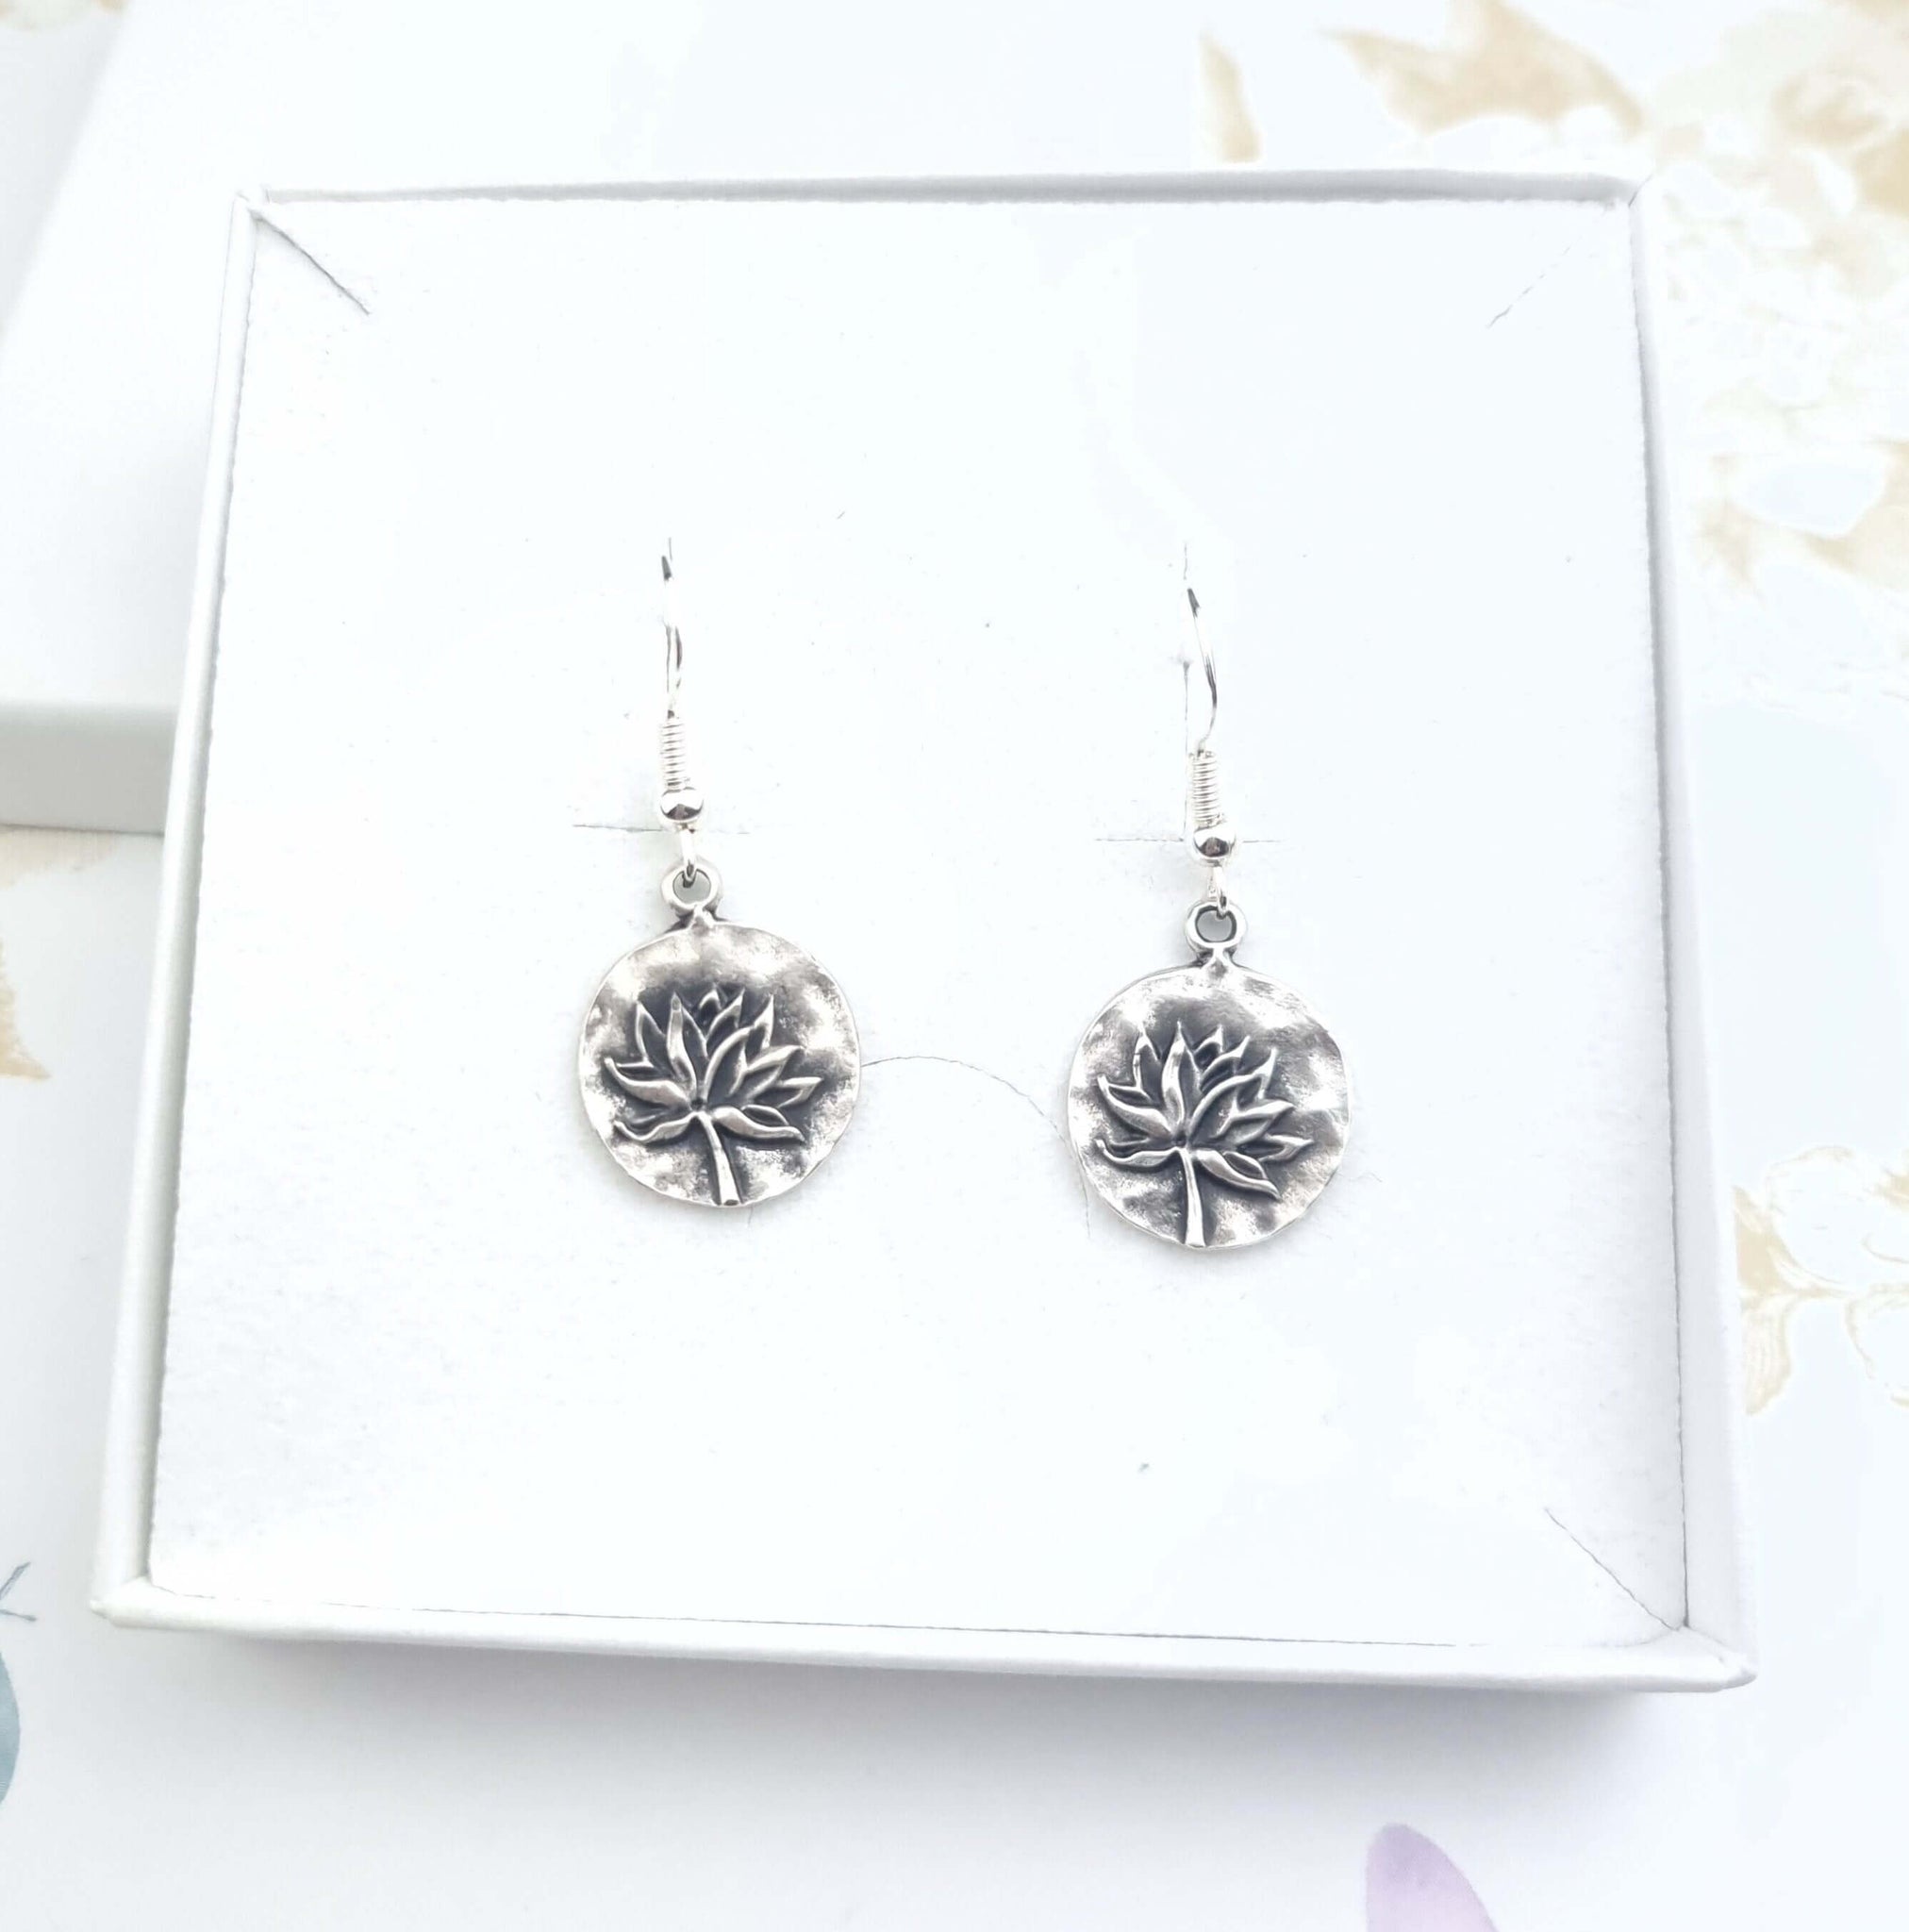 Drop dangle lotus earrings in a gift box